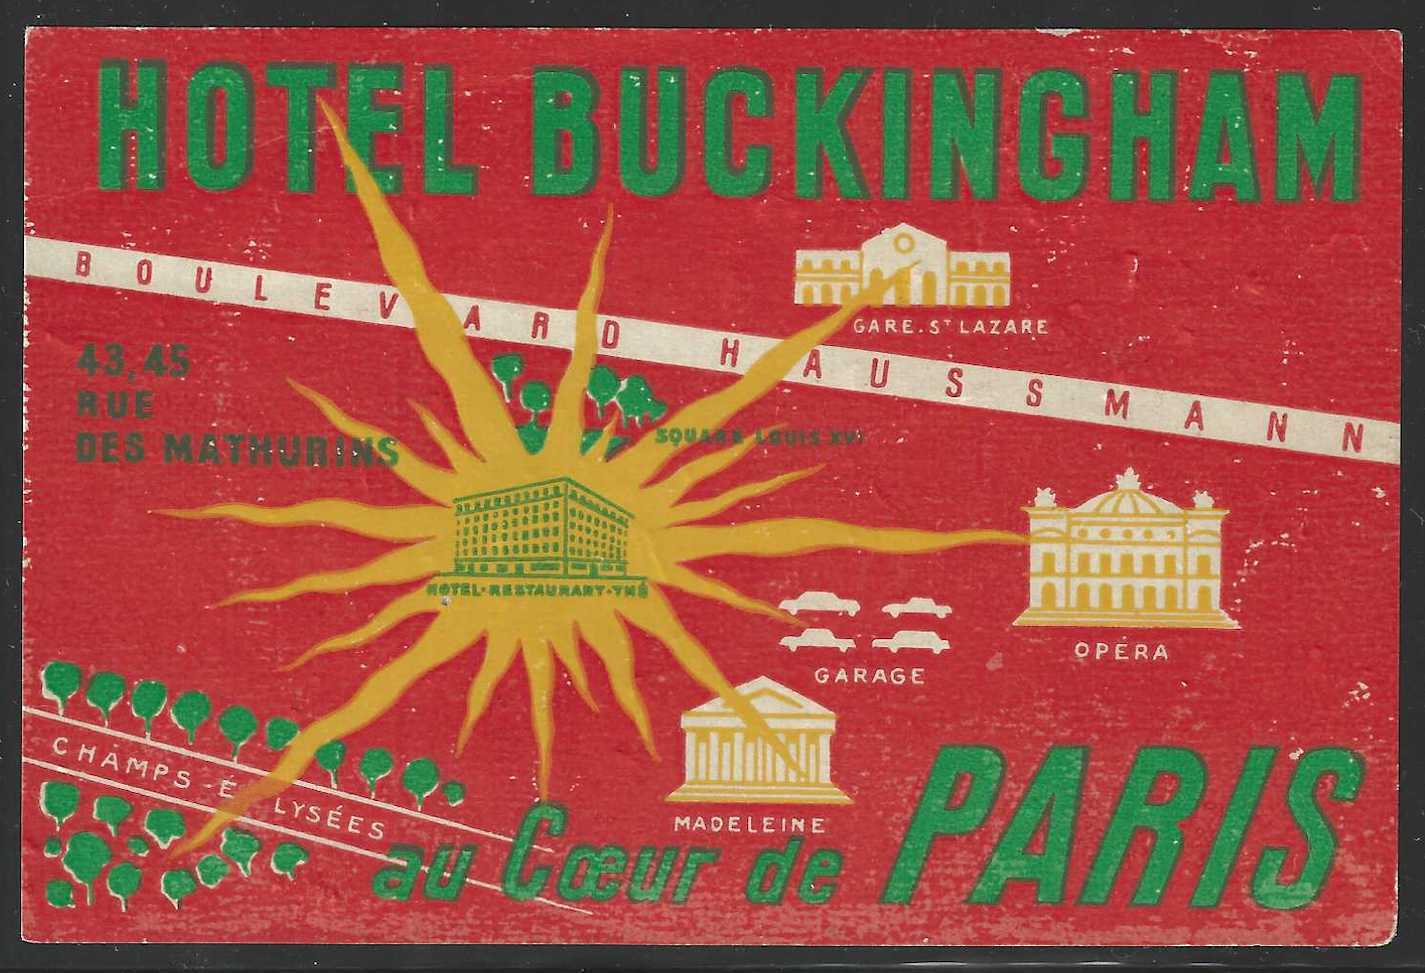 Hotel Buckingham, Paris, France, Hotel Label, Unused, Size: 102 mm x 79 mm.